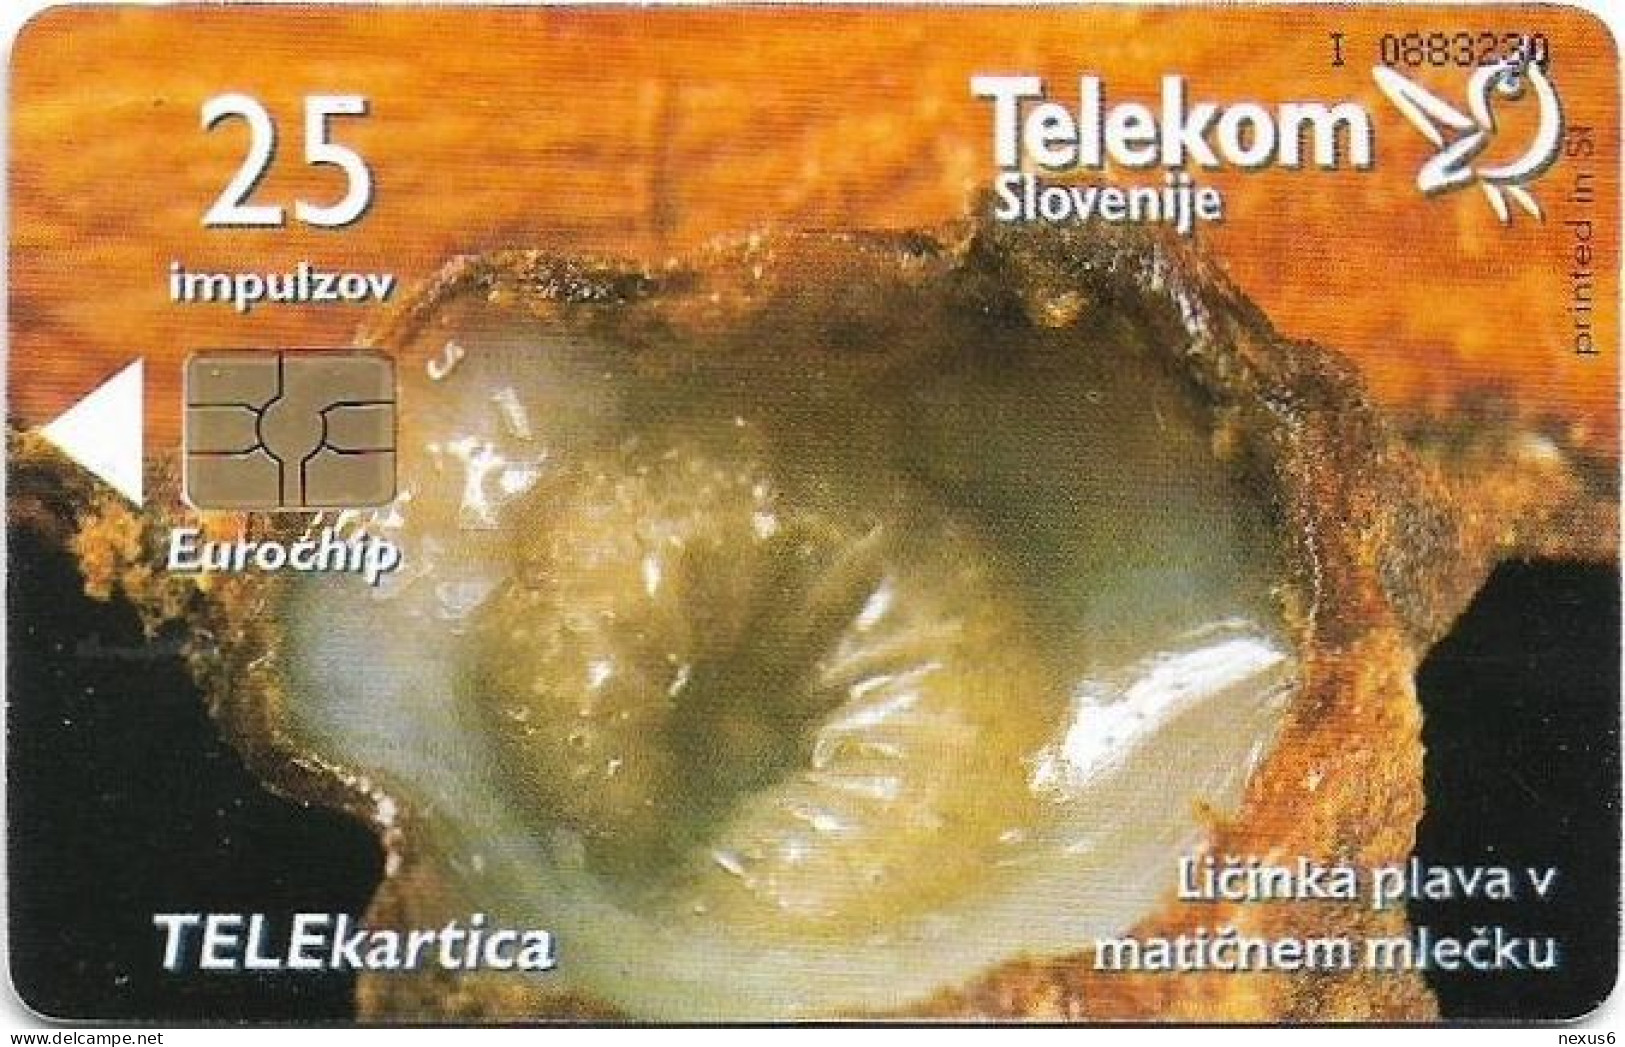 Slovenia - Telekom Slovenije - Carniolan Honey Bee - Ličinka Plava V, Gem5 Red, 07.2001, 25Units, 9.993ex, Used - Slowenien